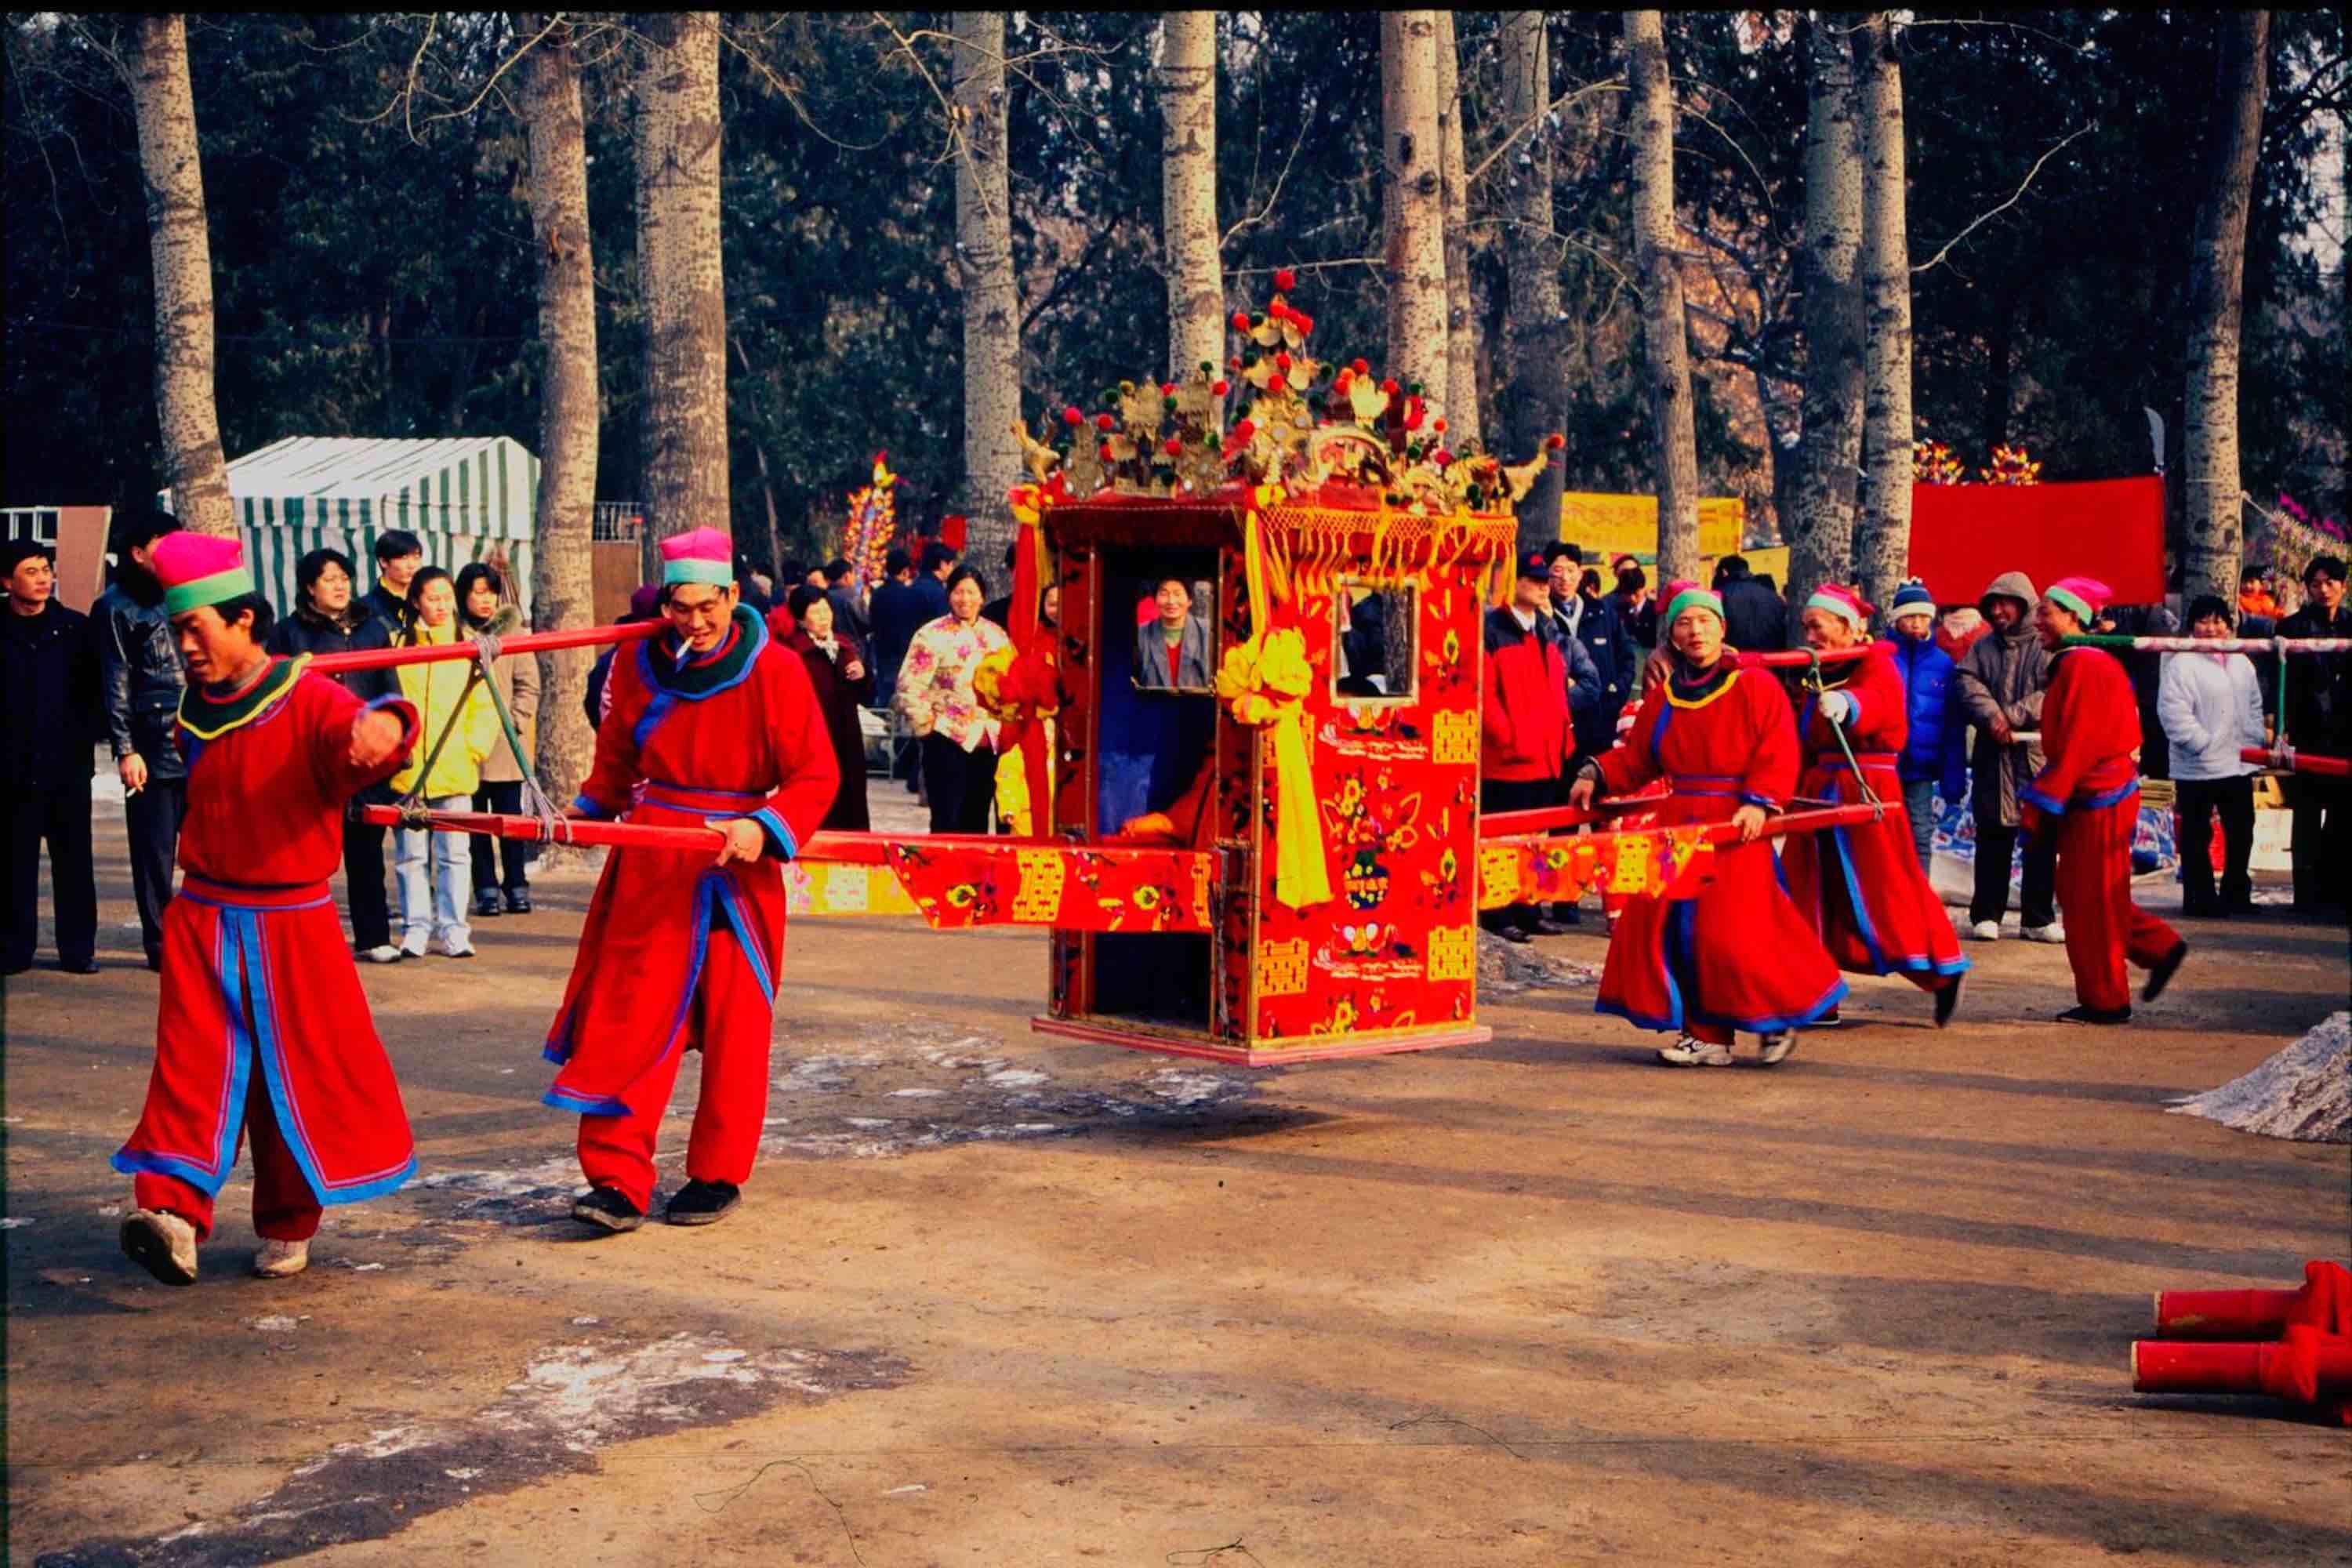 Traditional-bridal-box-during-Spring-Festival-at-Ditan-Park-Beijing-2002..jpeg